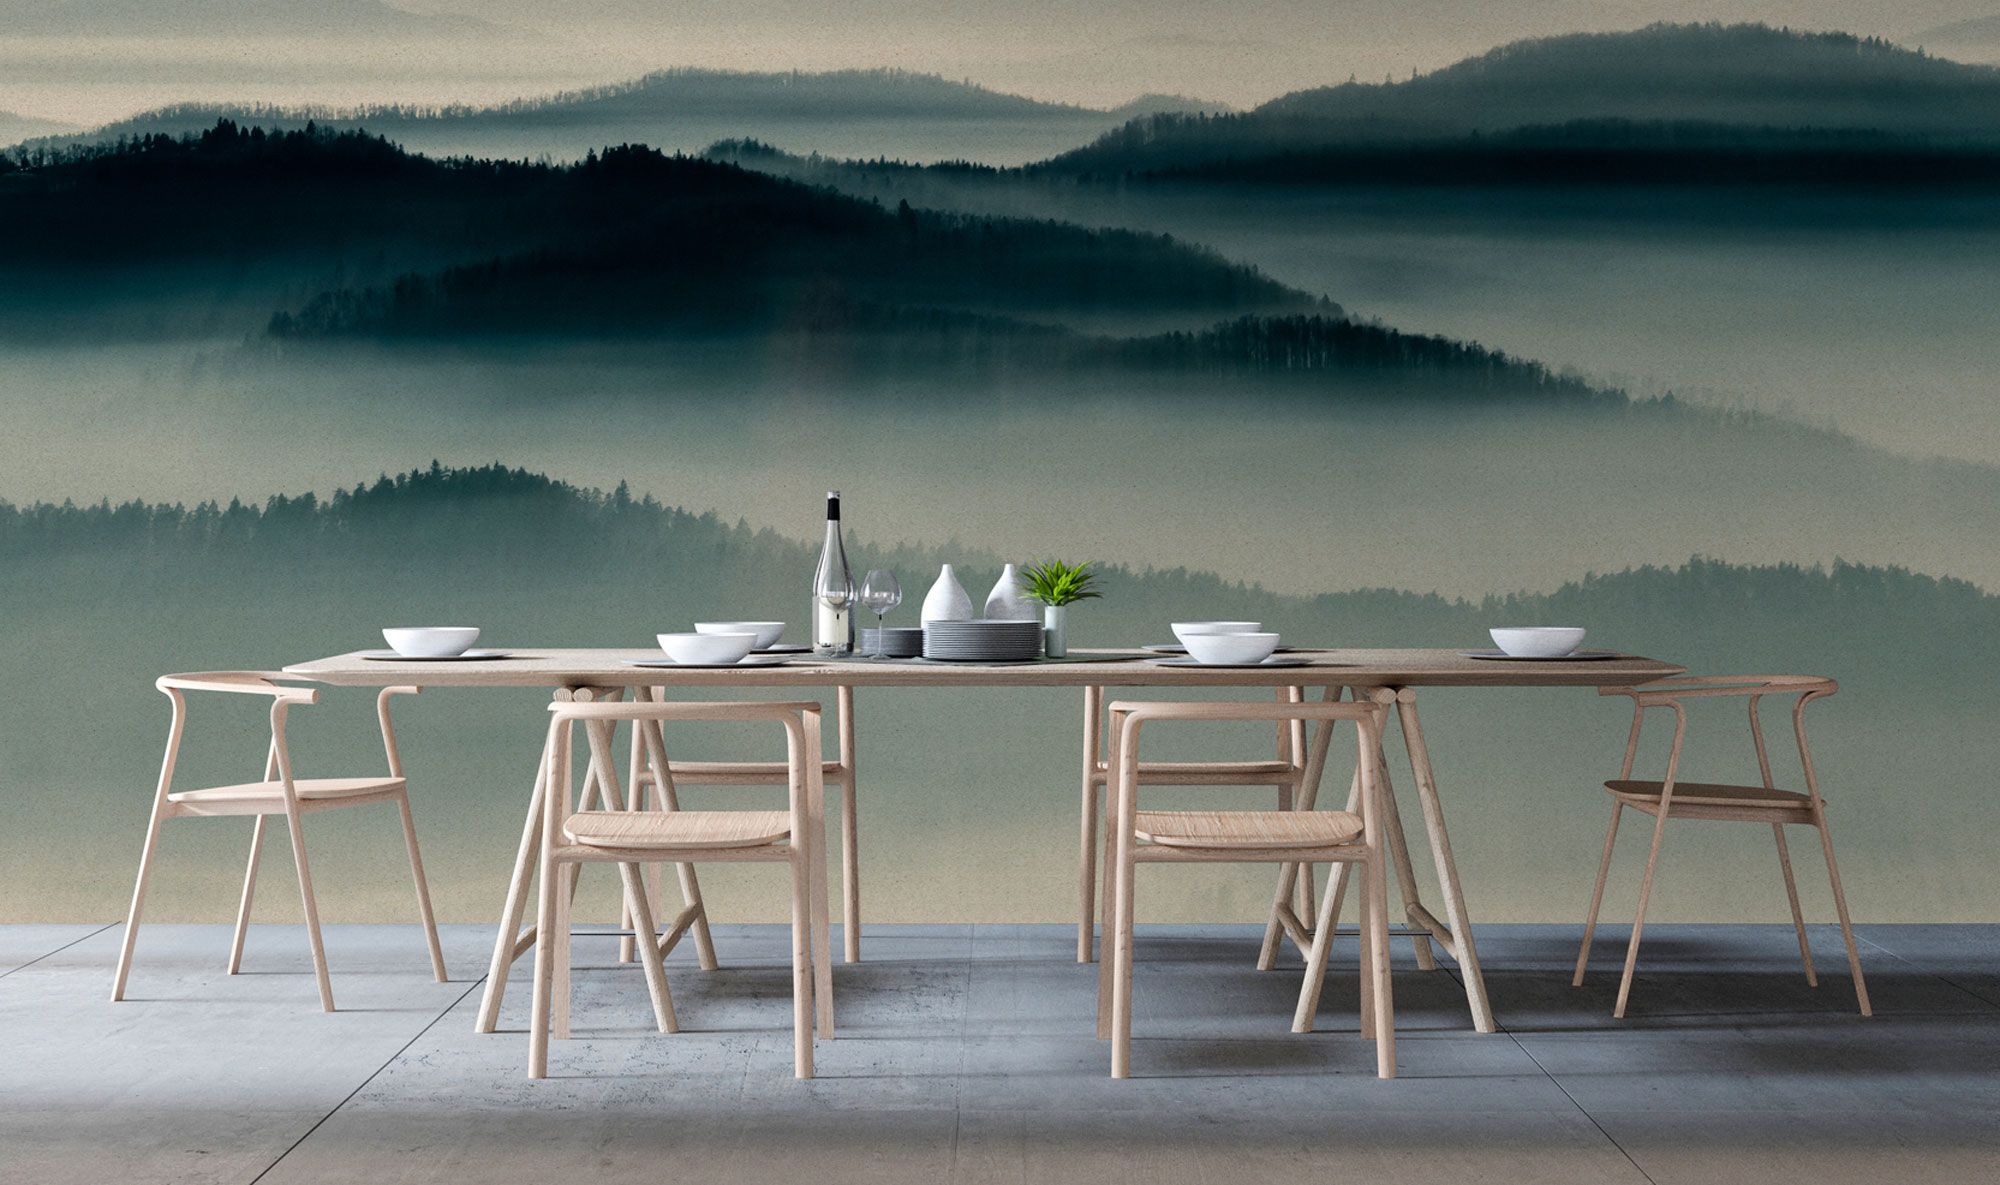 Horizon 1 - Fototapete mit Nebel-Landschaft, Natur Sky Line in Pappe Struktur – Beige, Blau | Premium Glattvlies